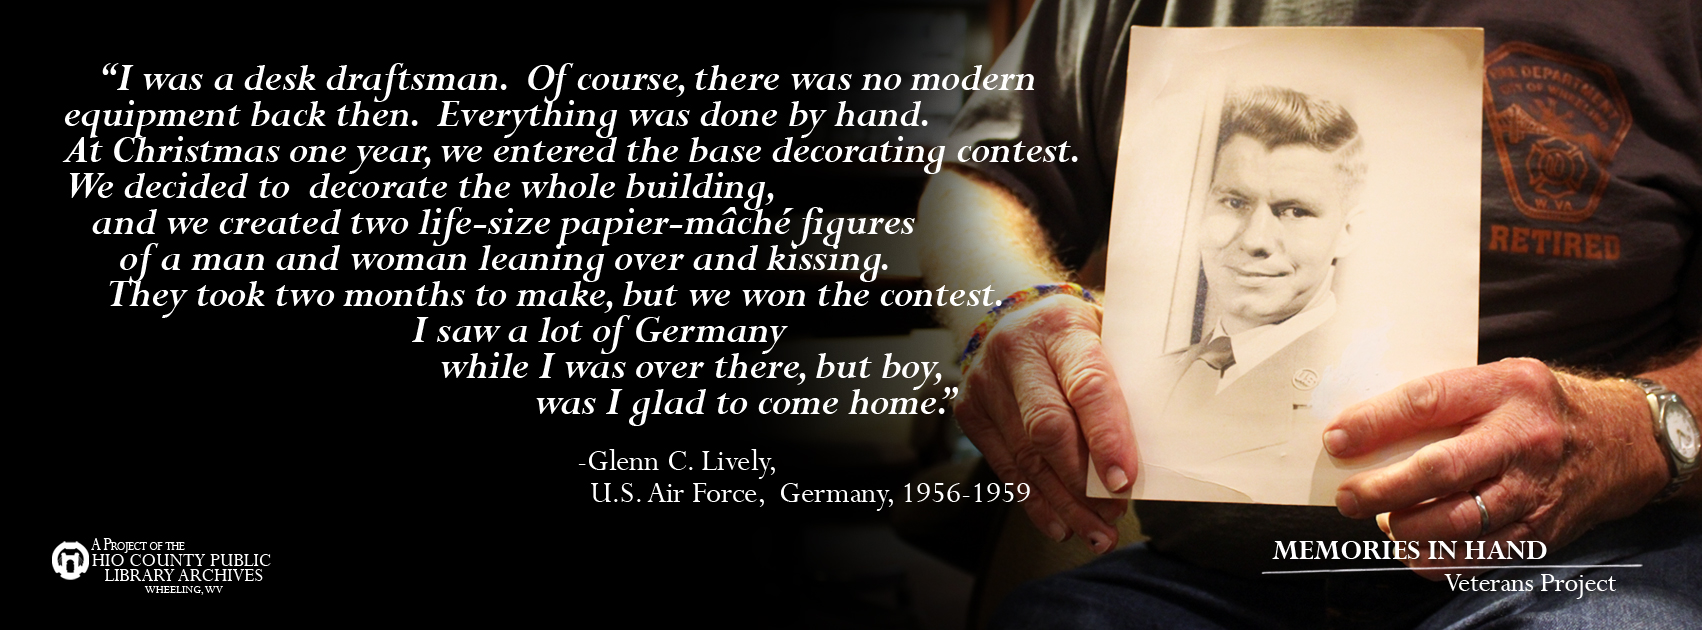 Glenn C. Lively, U.S. Air Force, 1956-1959